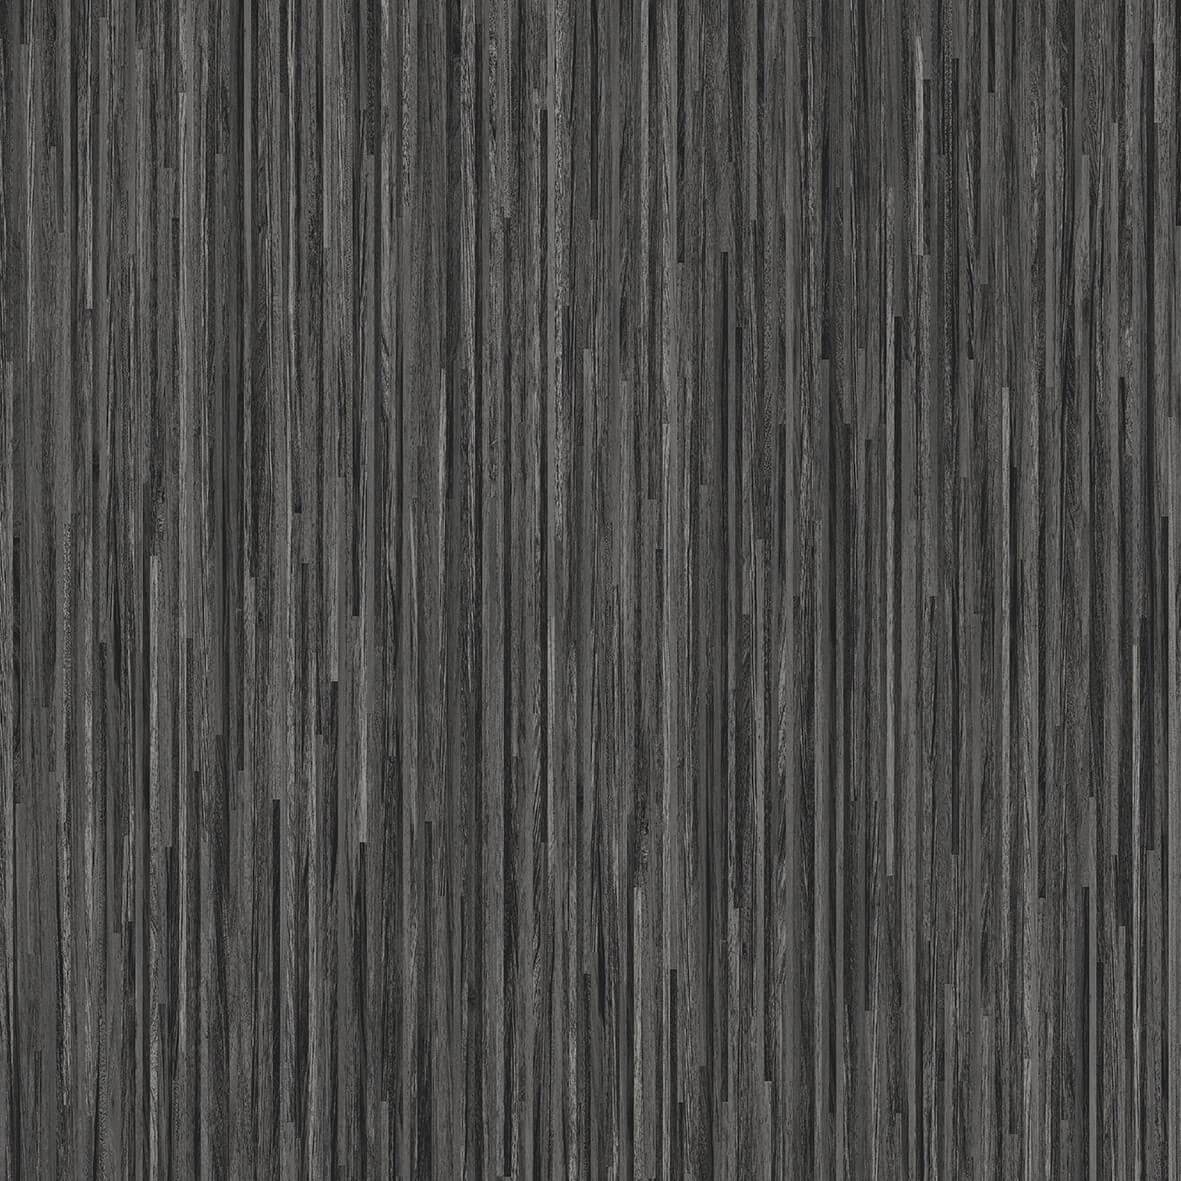 Bolivia Black Bamboo 599 Commercial Vinyl Lino Flooring 4m Width SQM Price is £9.95 - Decoridea.co.uk